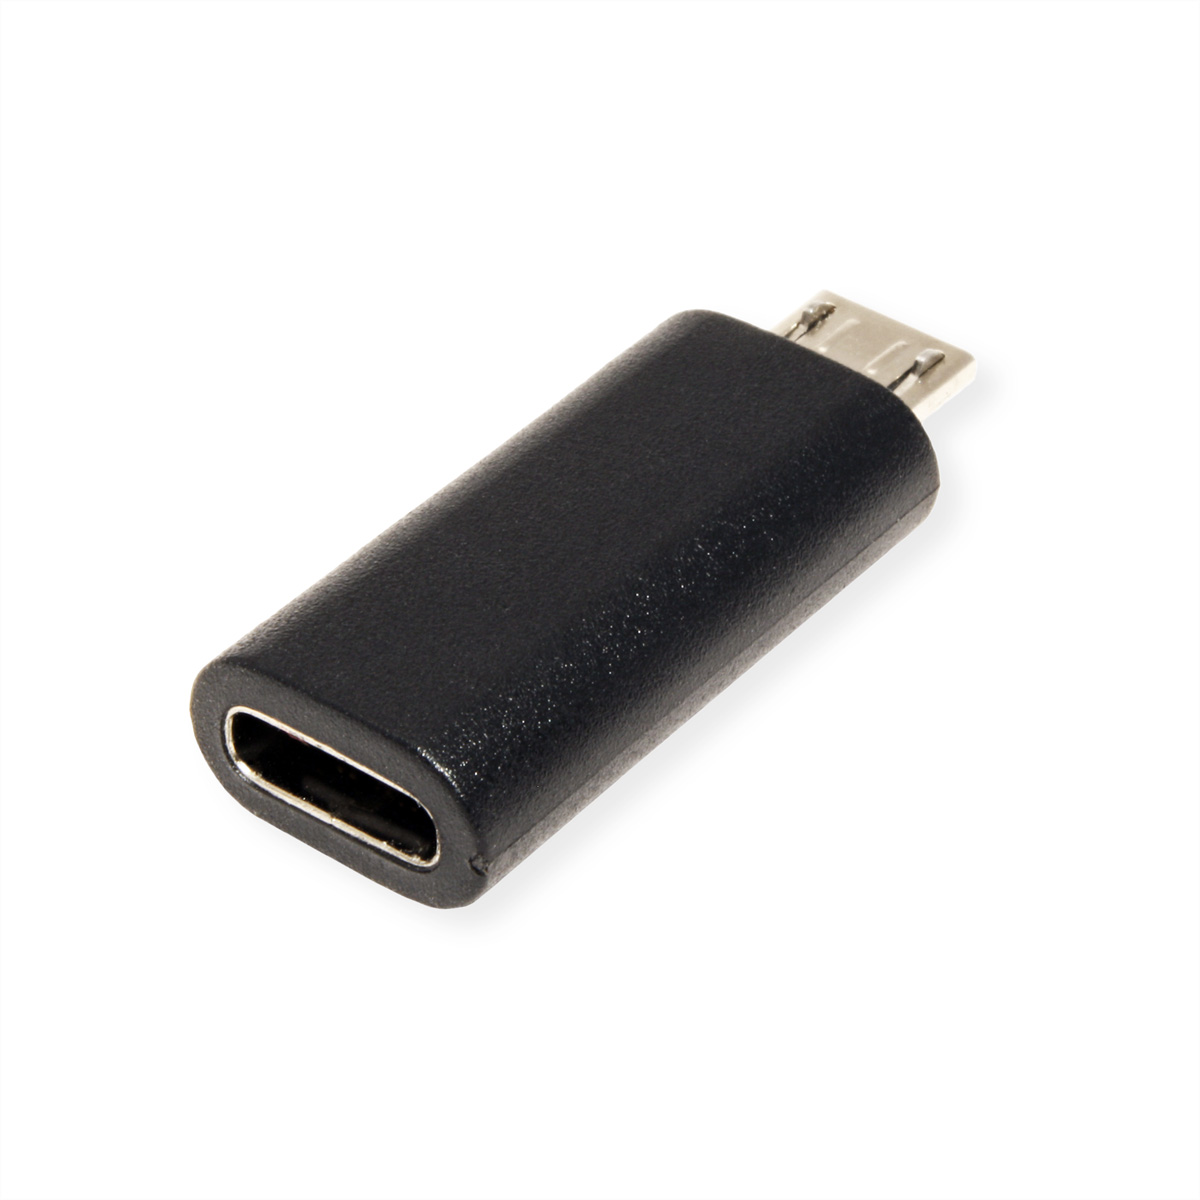 VALUE USB 2.0 ST/BU Micro Adapter, Adapter MicroB USB Typ C, 